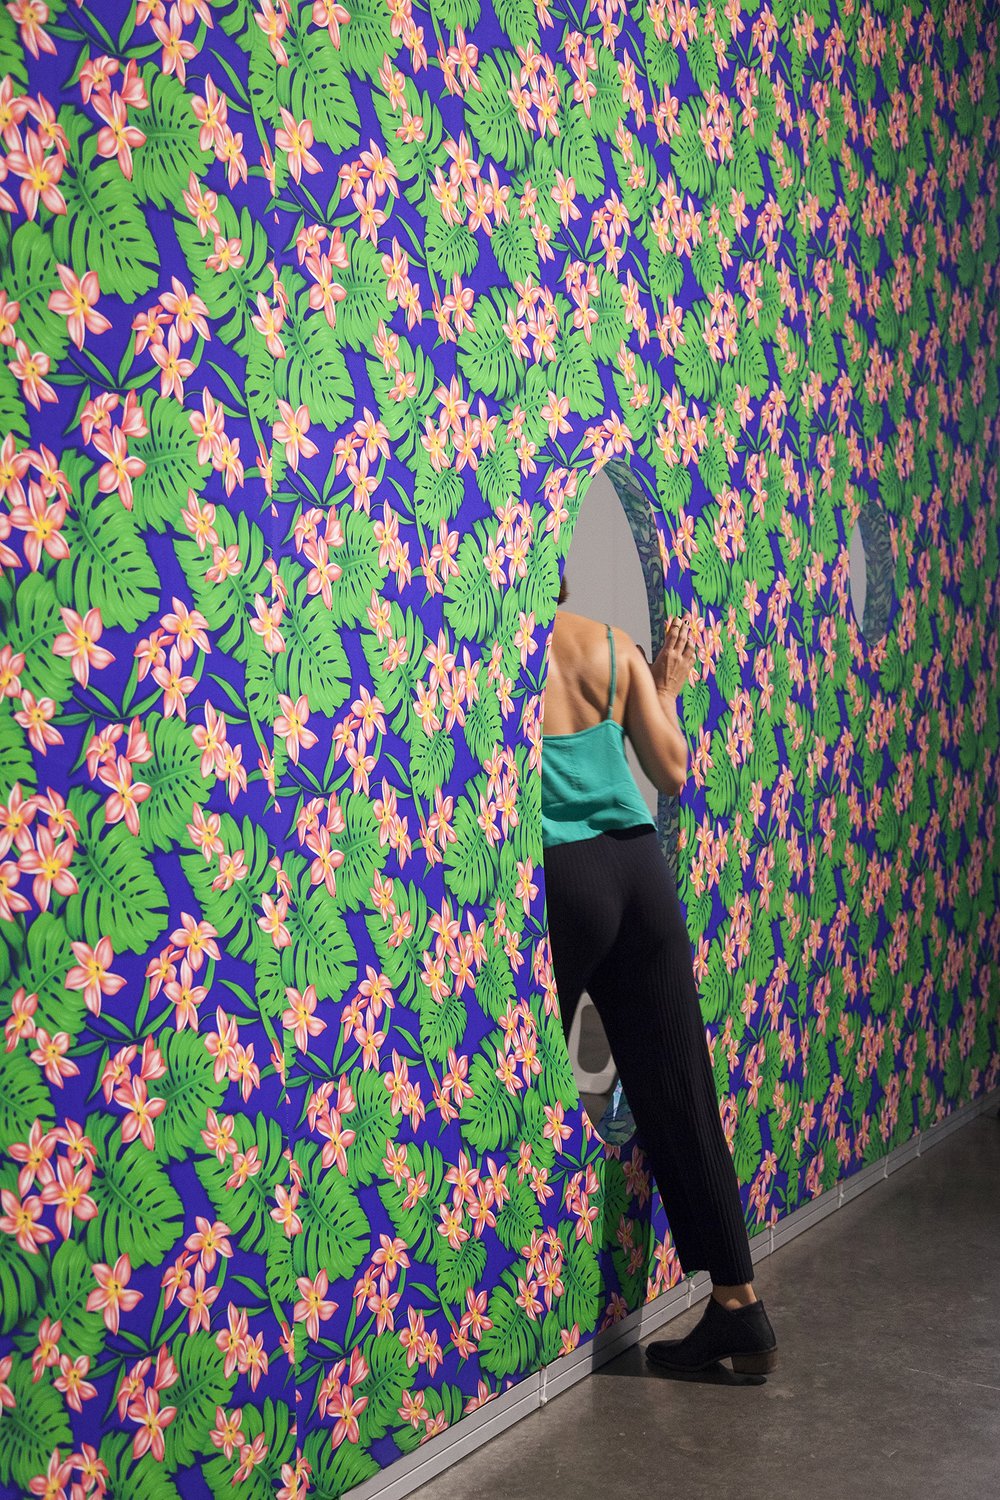 Joiri Minaya, Spandex installation #4, Retornando la Mirada, 2019, spandex fabric, wood beams, zipties, 12 x 22 ft. Casa Quien booth at ArteBA Art Fair, courtesy of Casa Quien Gallery photo by Catalina Romero (3) (smaller).jpg